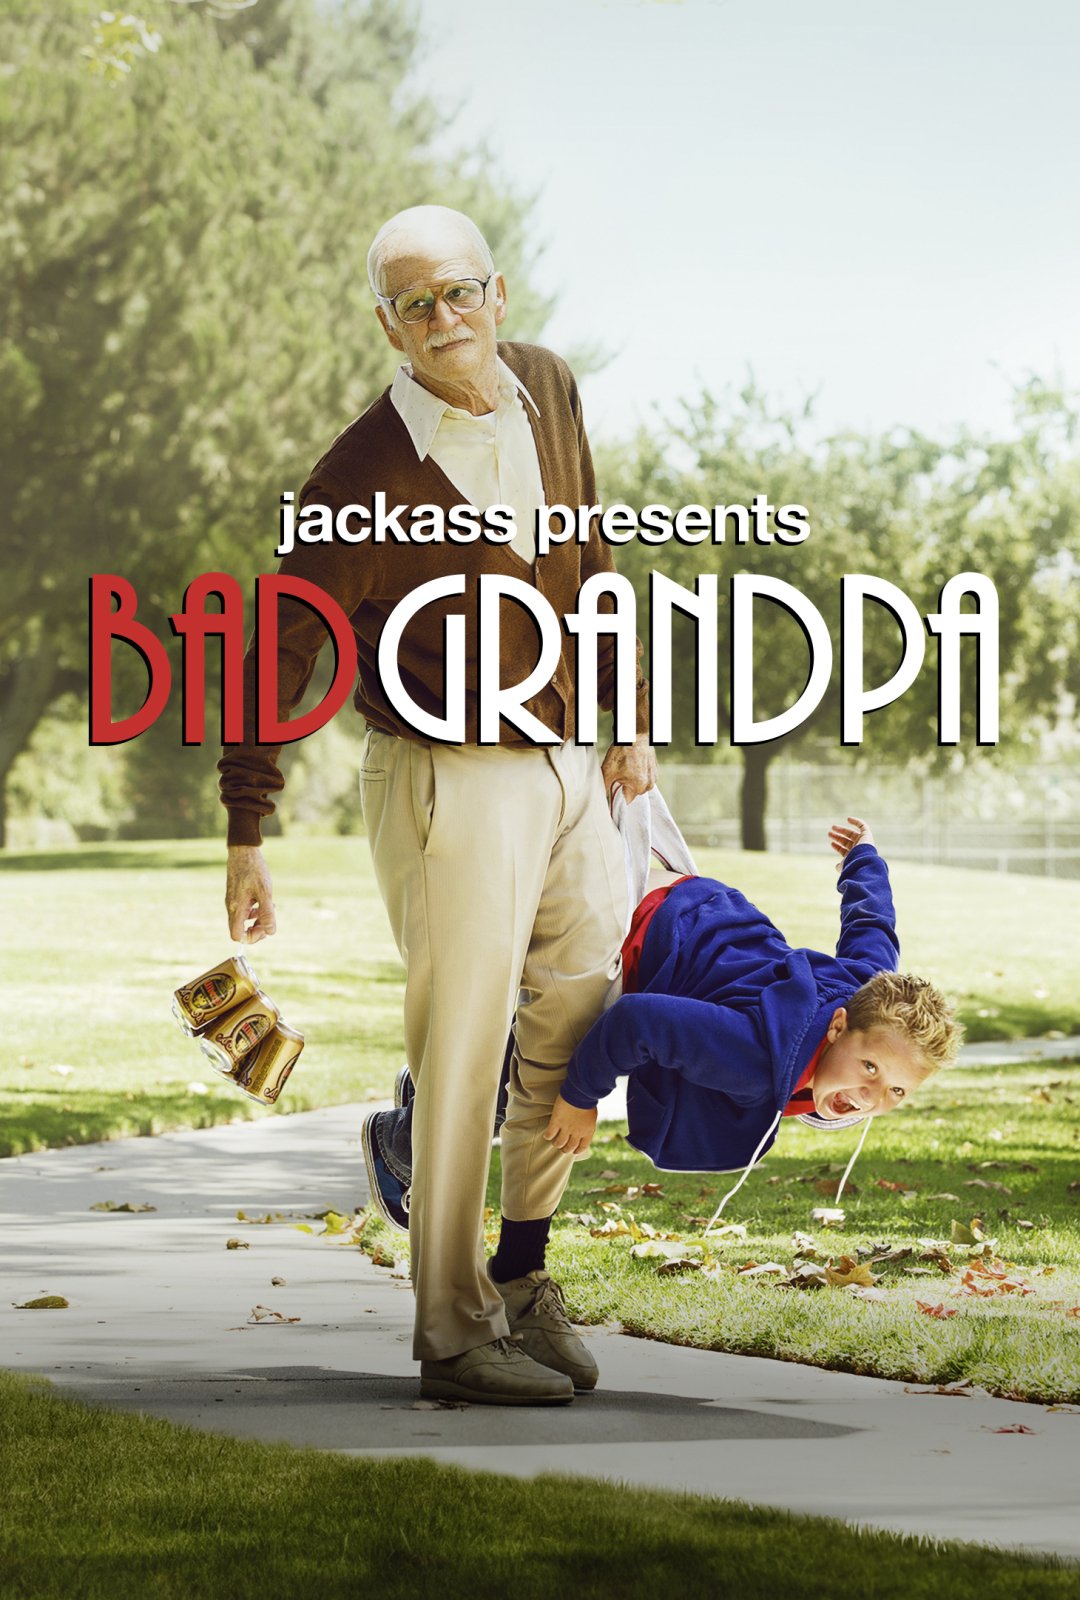 Jackass Presents: Bad Grandpa... (2013)